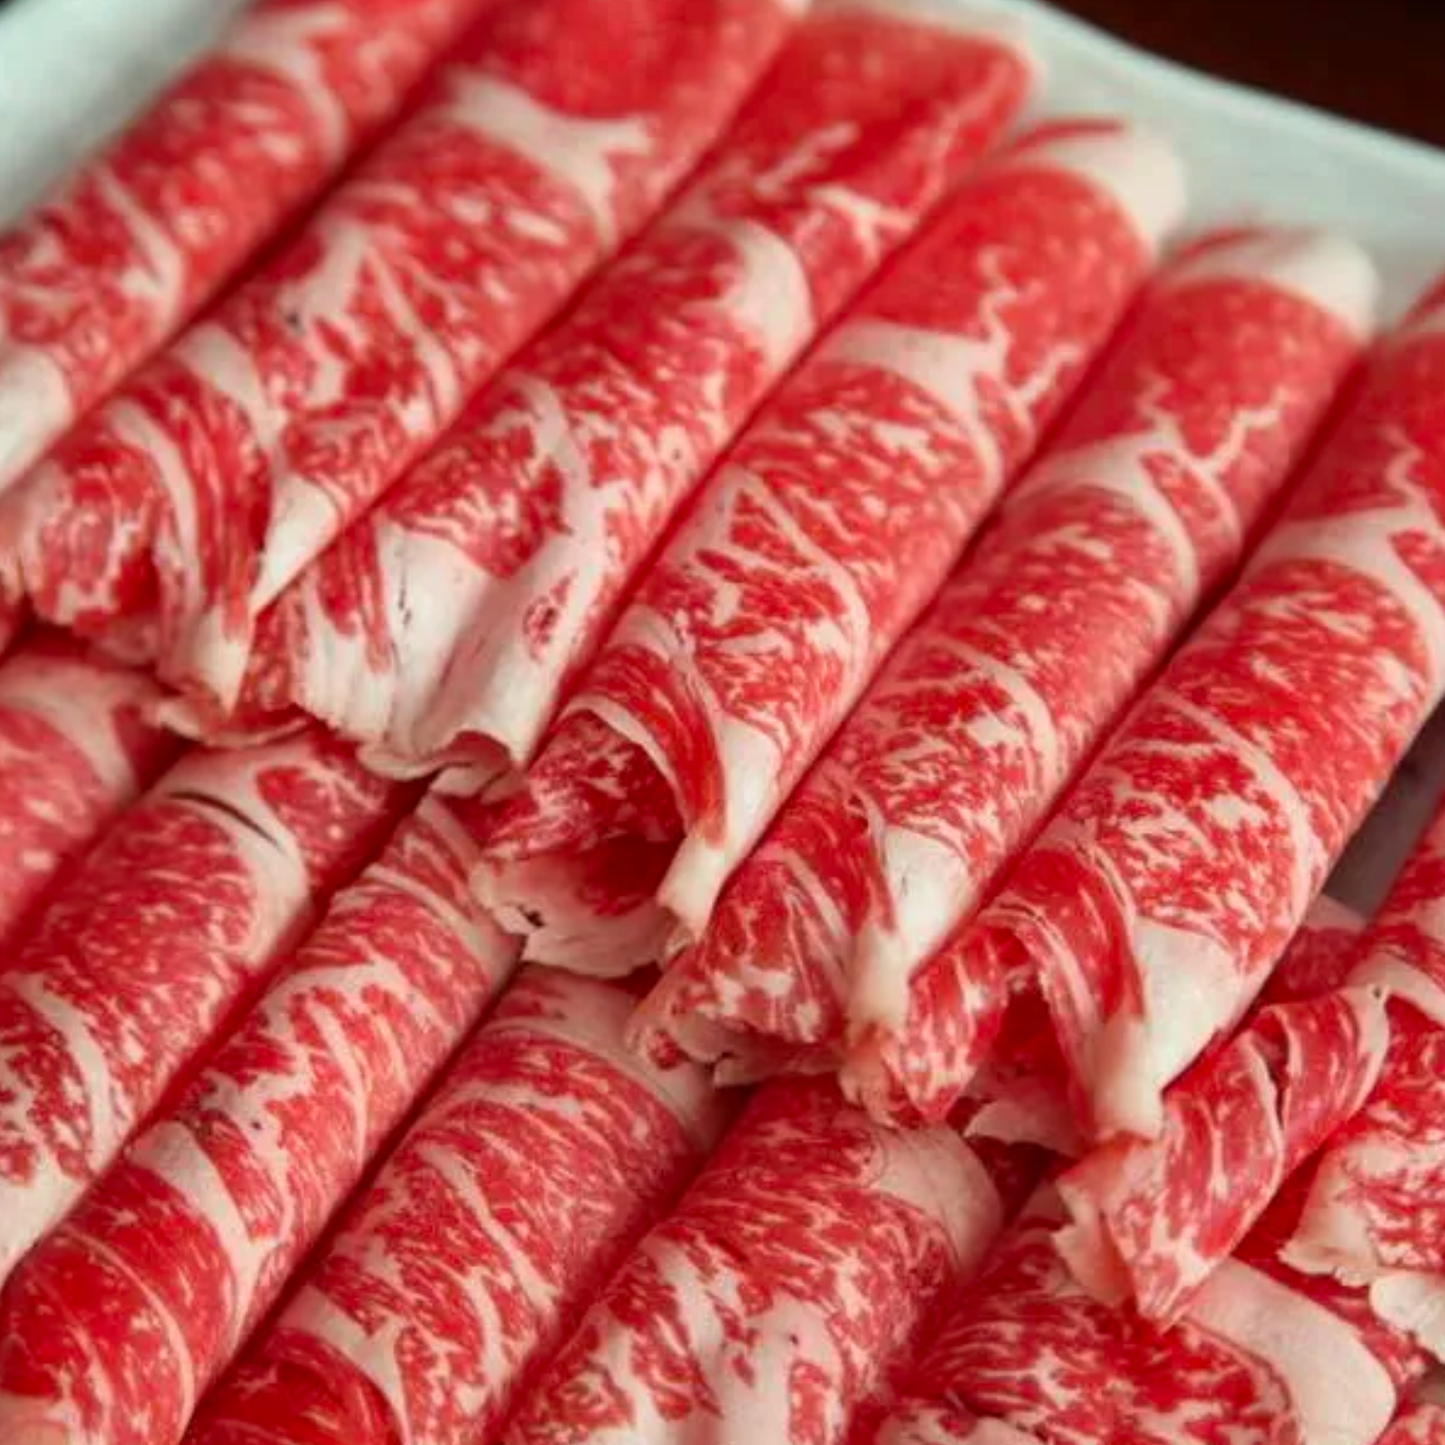 Beef Short Plate Rolled Shabu Shabu 300gm - Frozen